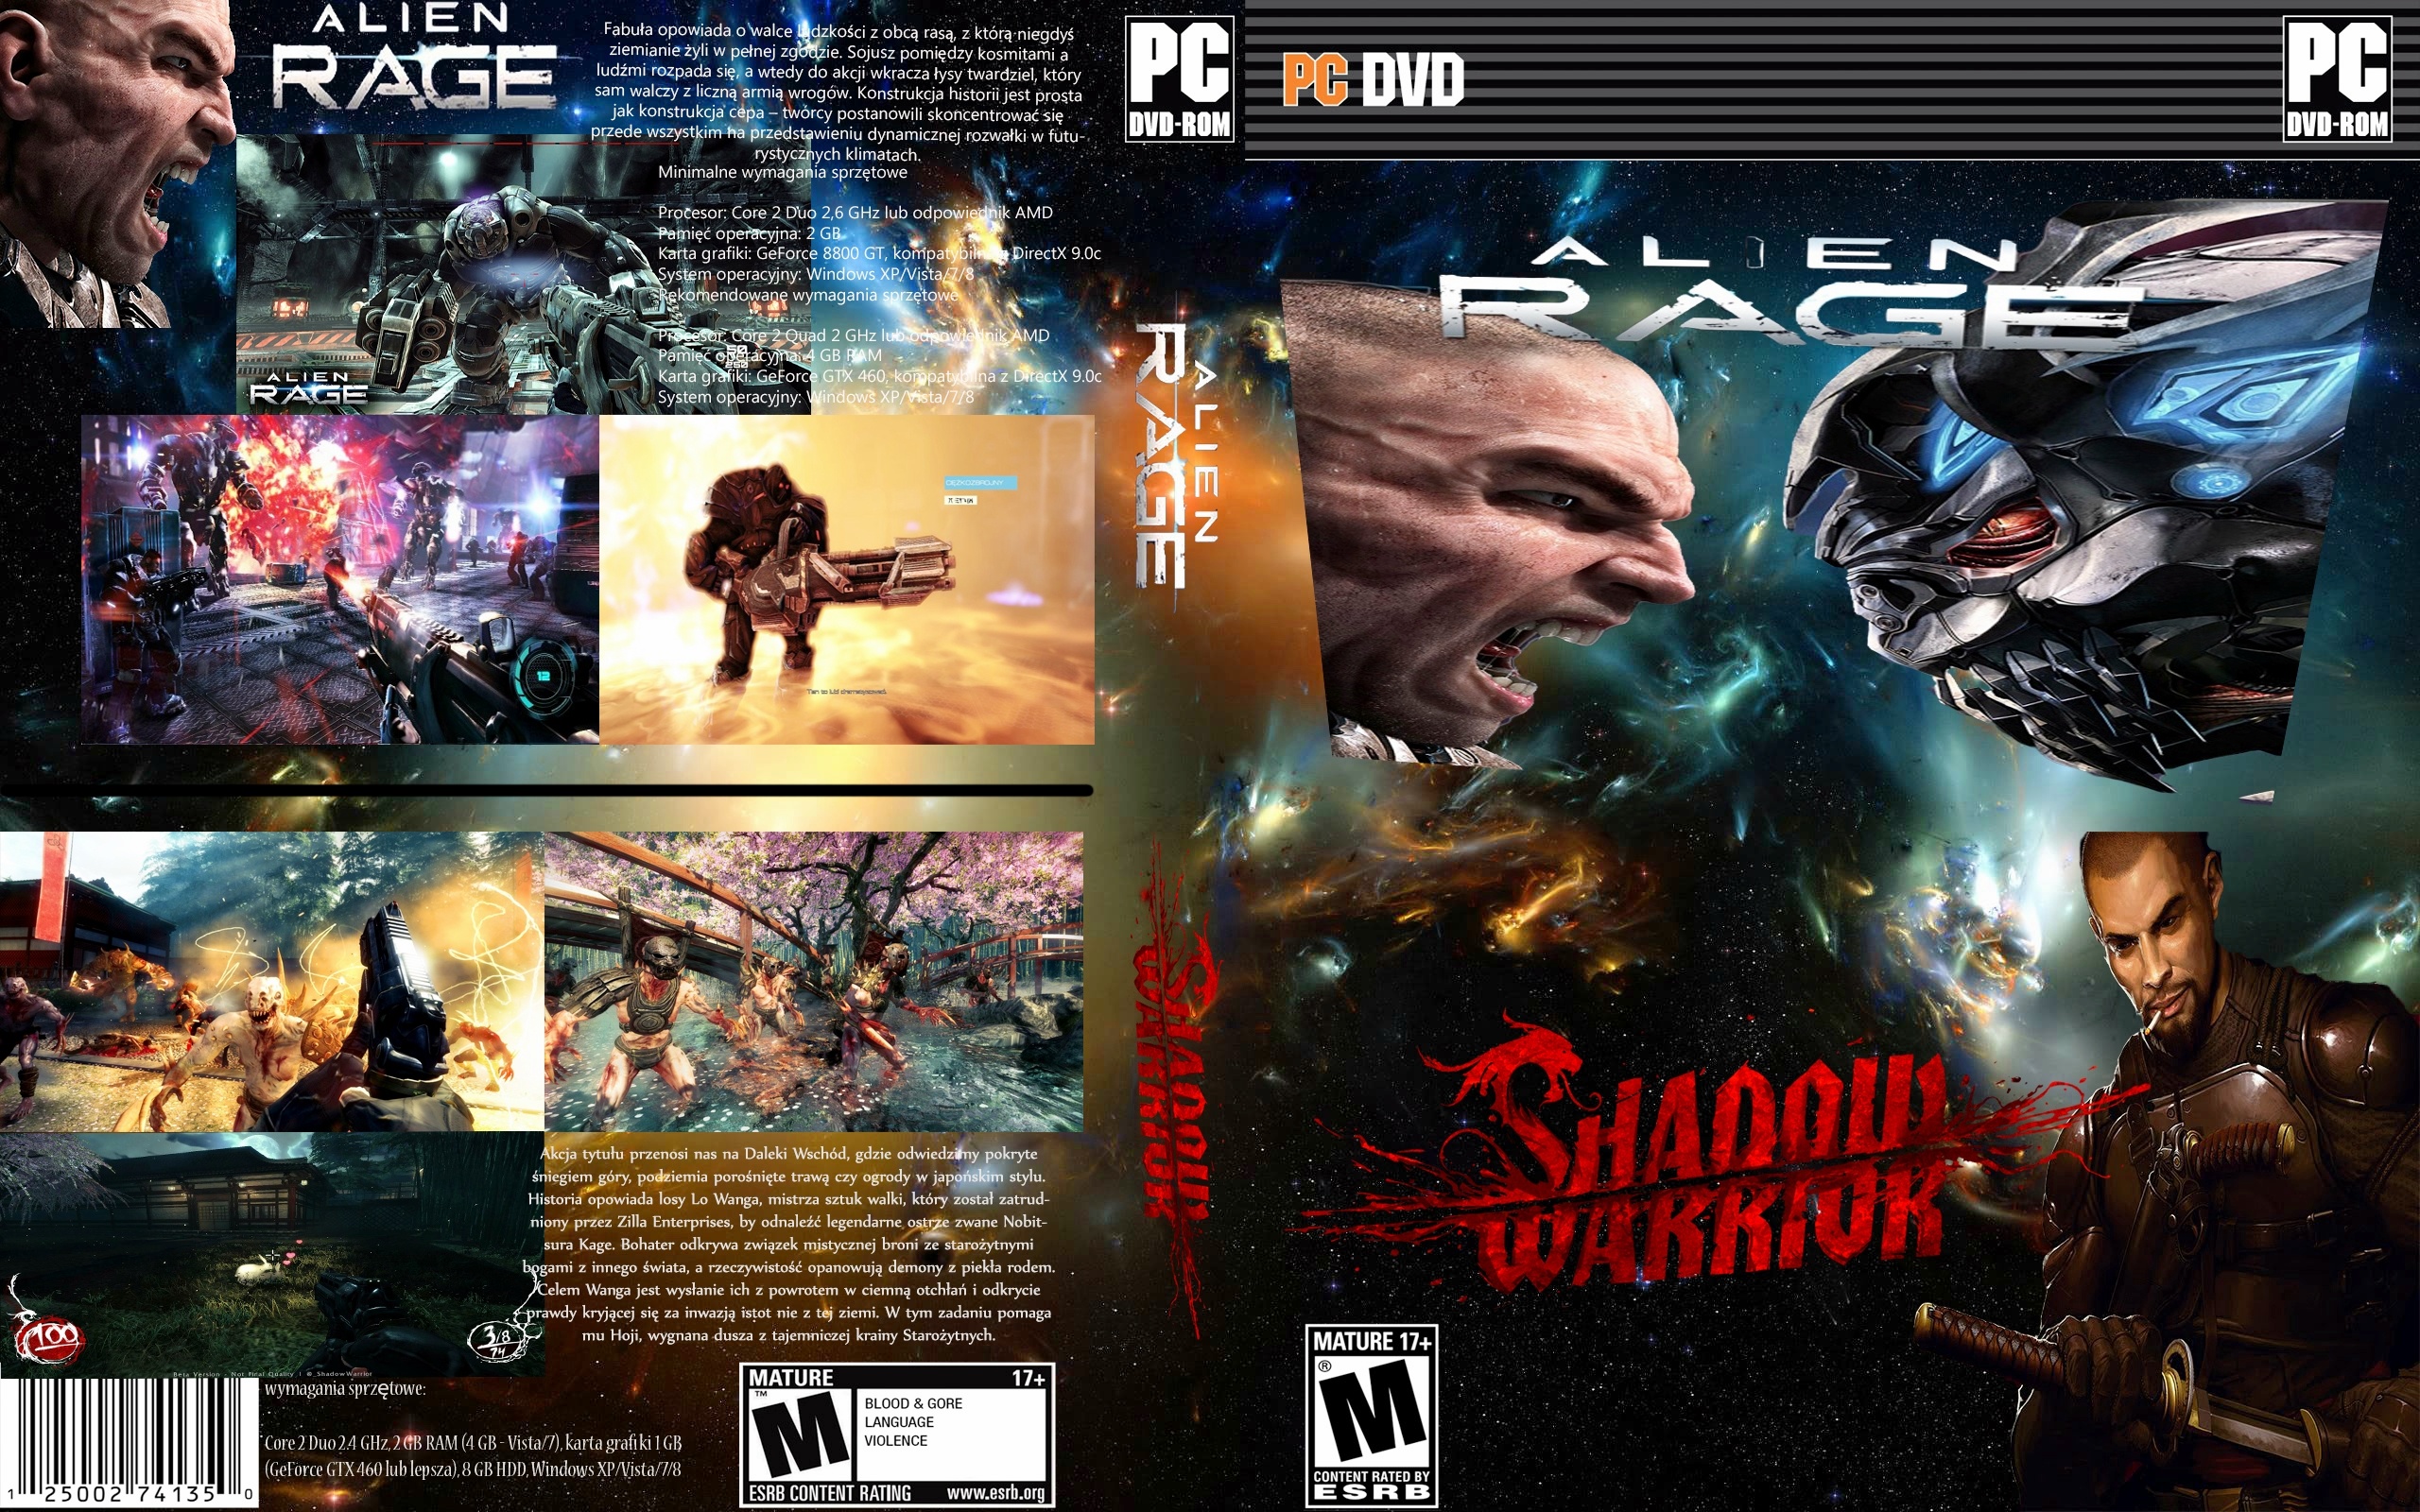 Shadow Warrior + Alien Rage box cover